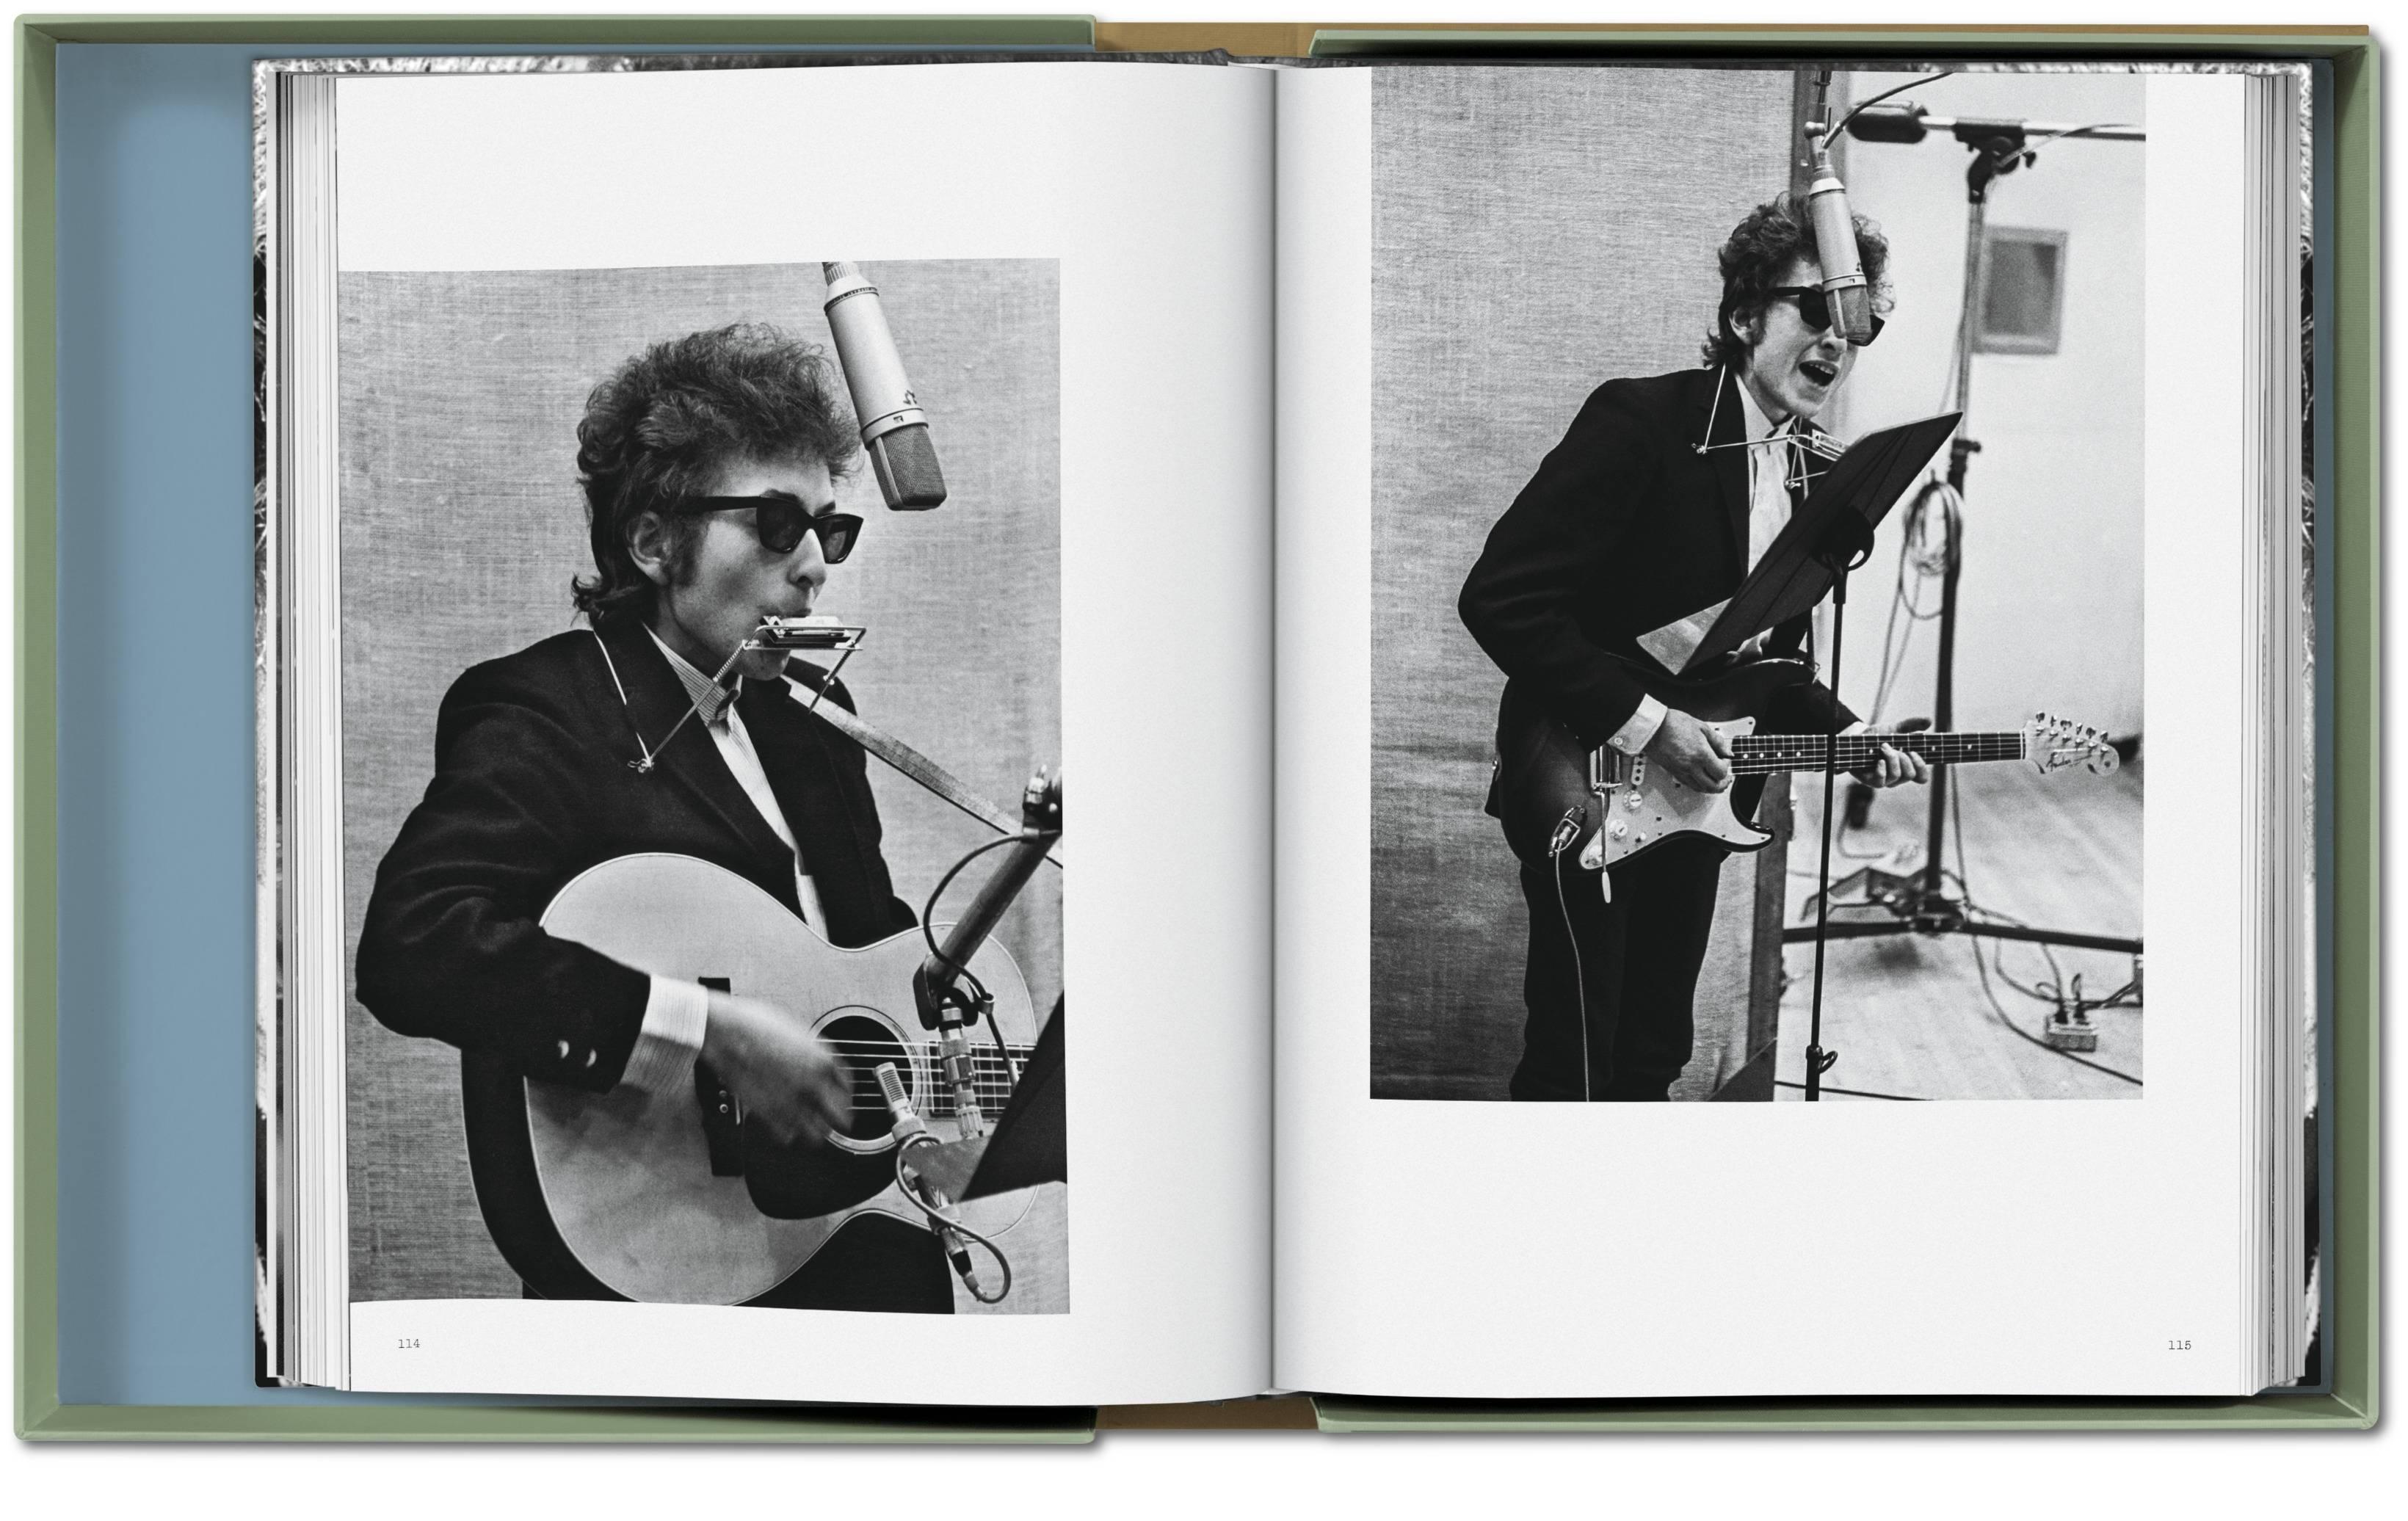 Daniel Kramer, Bob Dylan, Art Edition No. 1-100 ‘Bob Dylan with Dark Glasses, NY 2